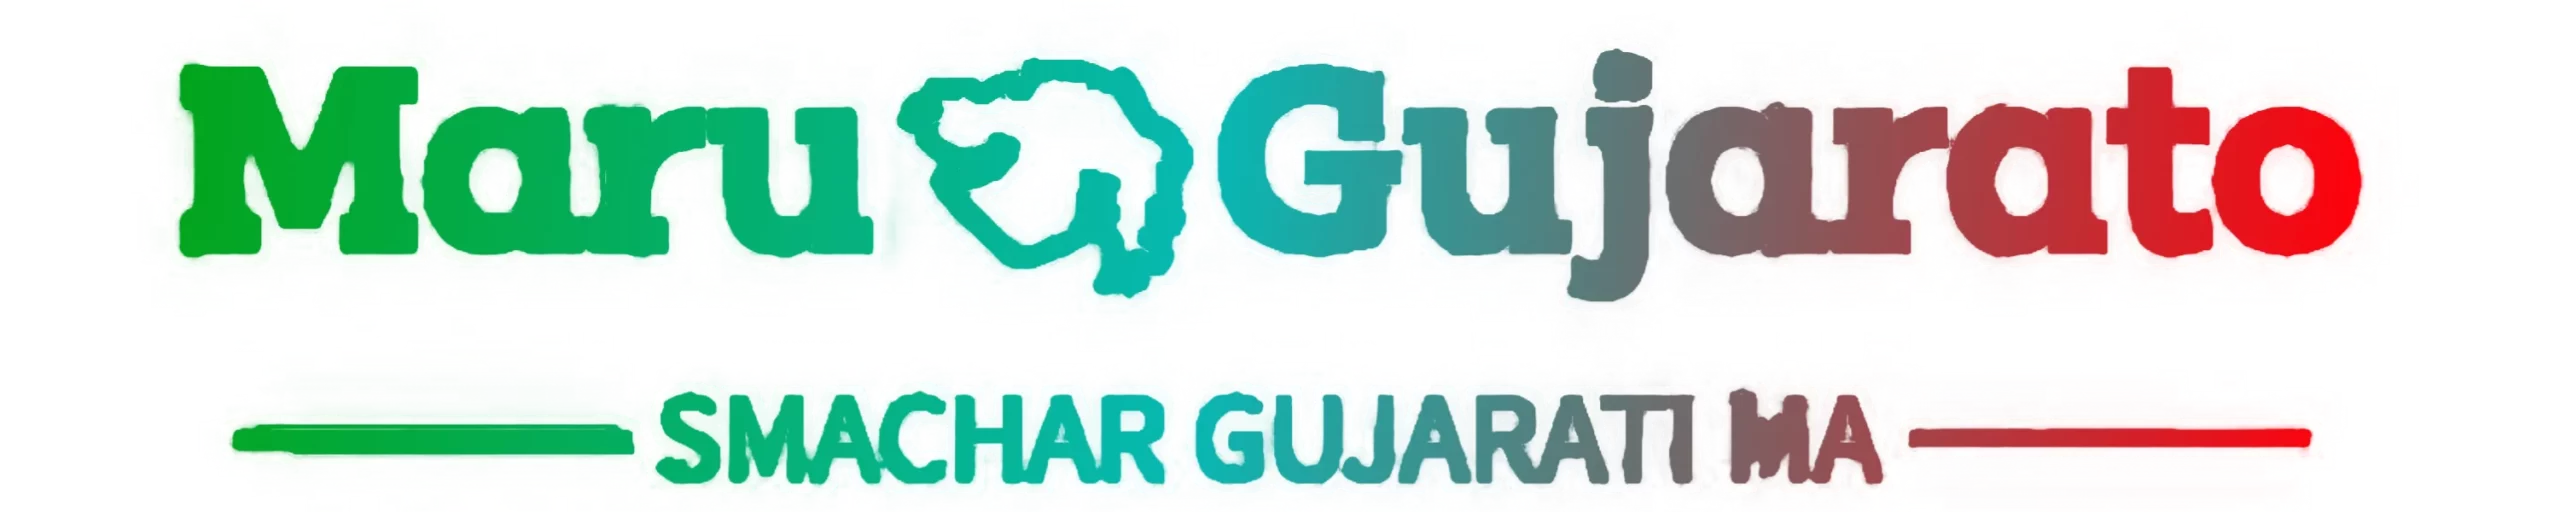 Maru Gujarat :: MaruGujarato.in :: maru gujarat.in , marugujarat.in